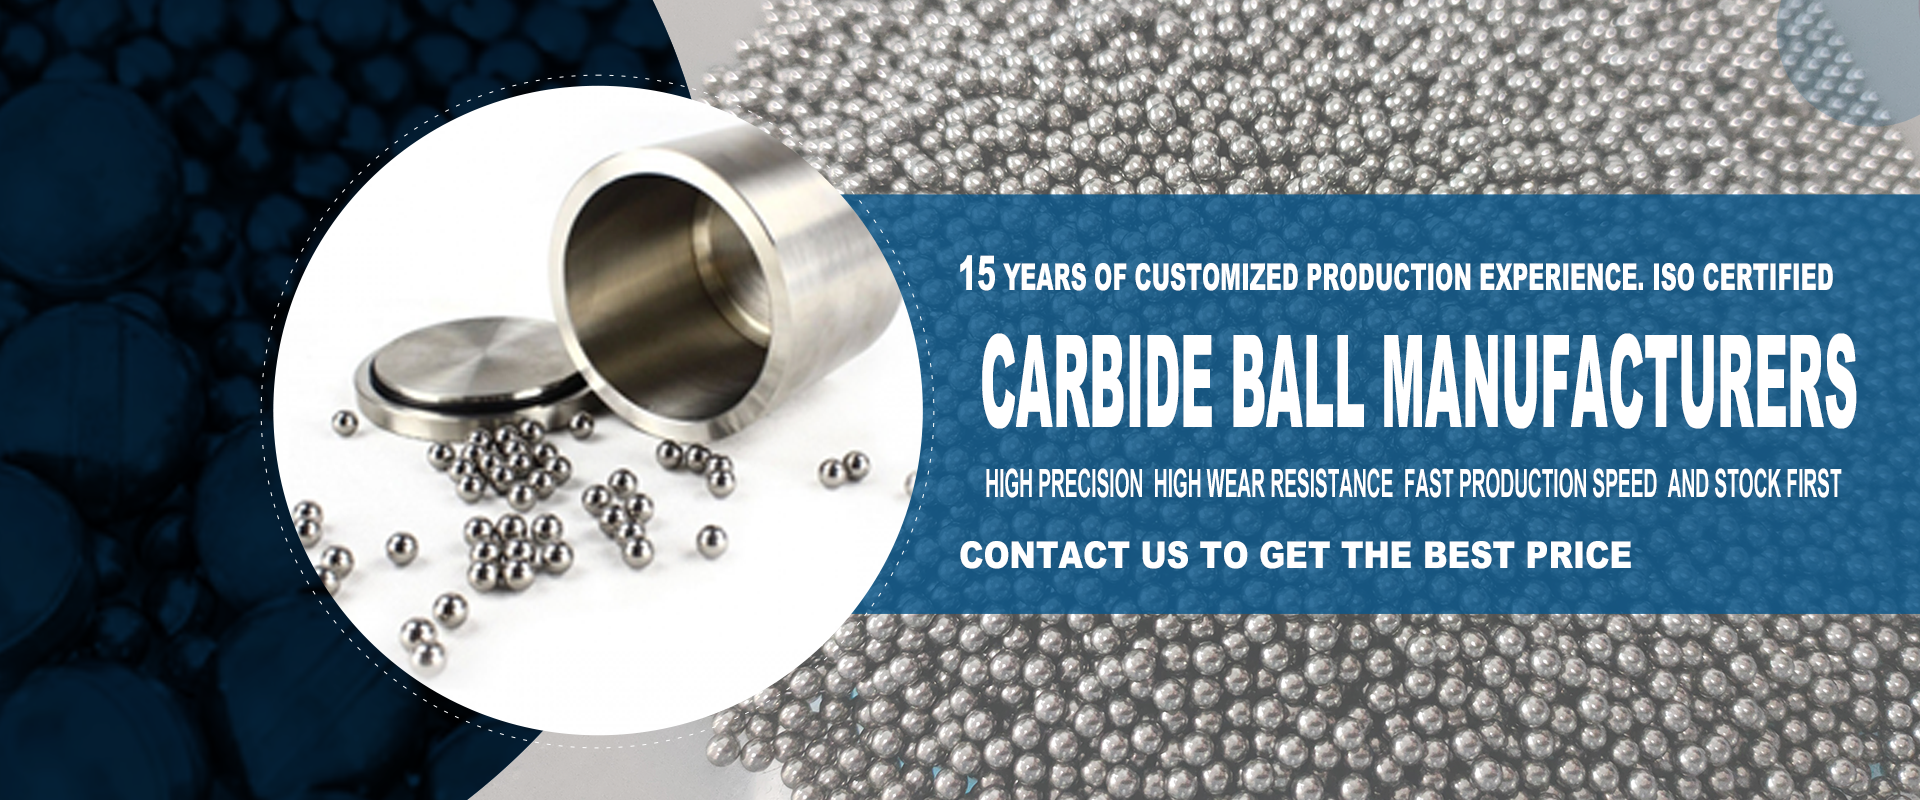 carbide ball manufacture